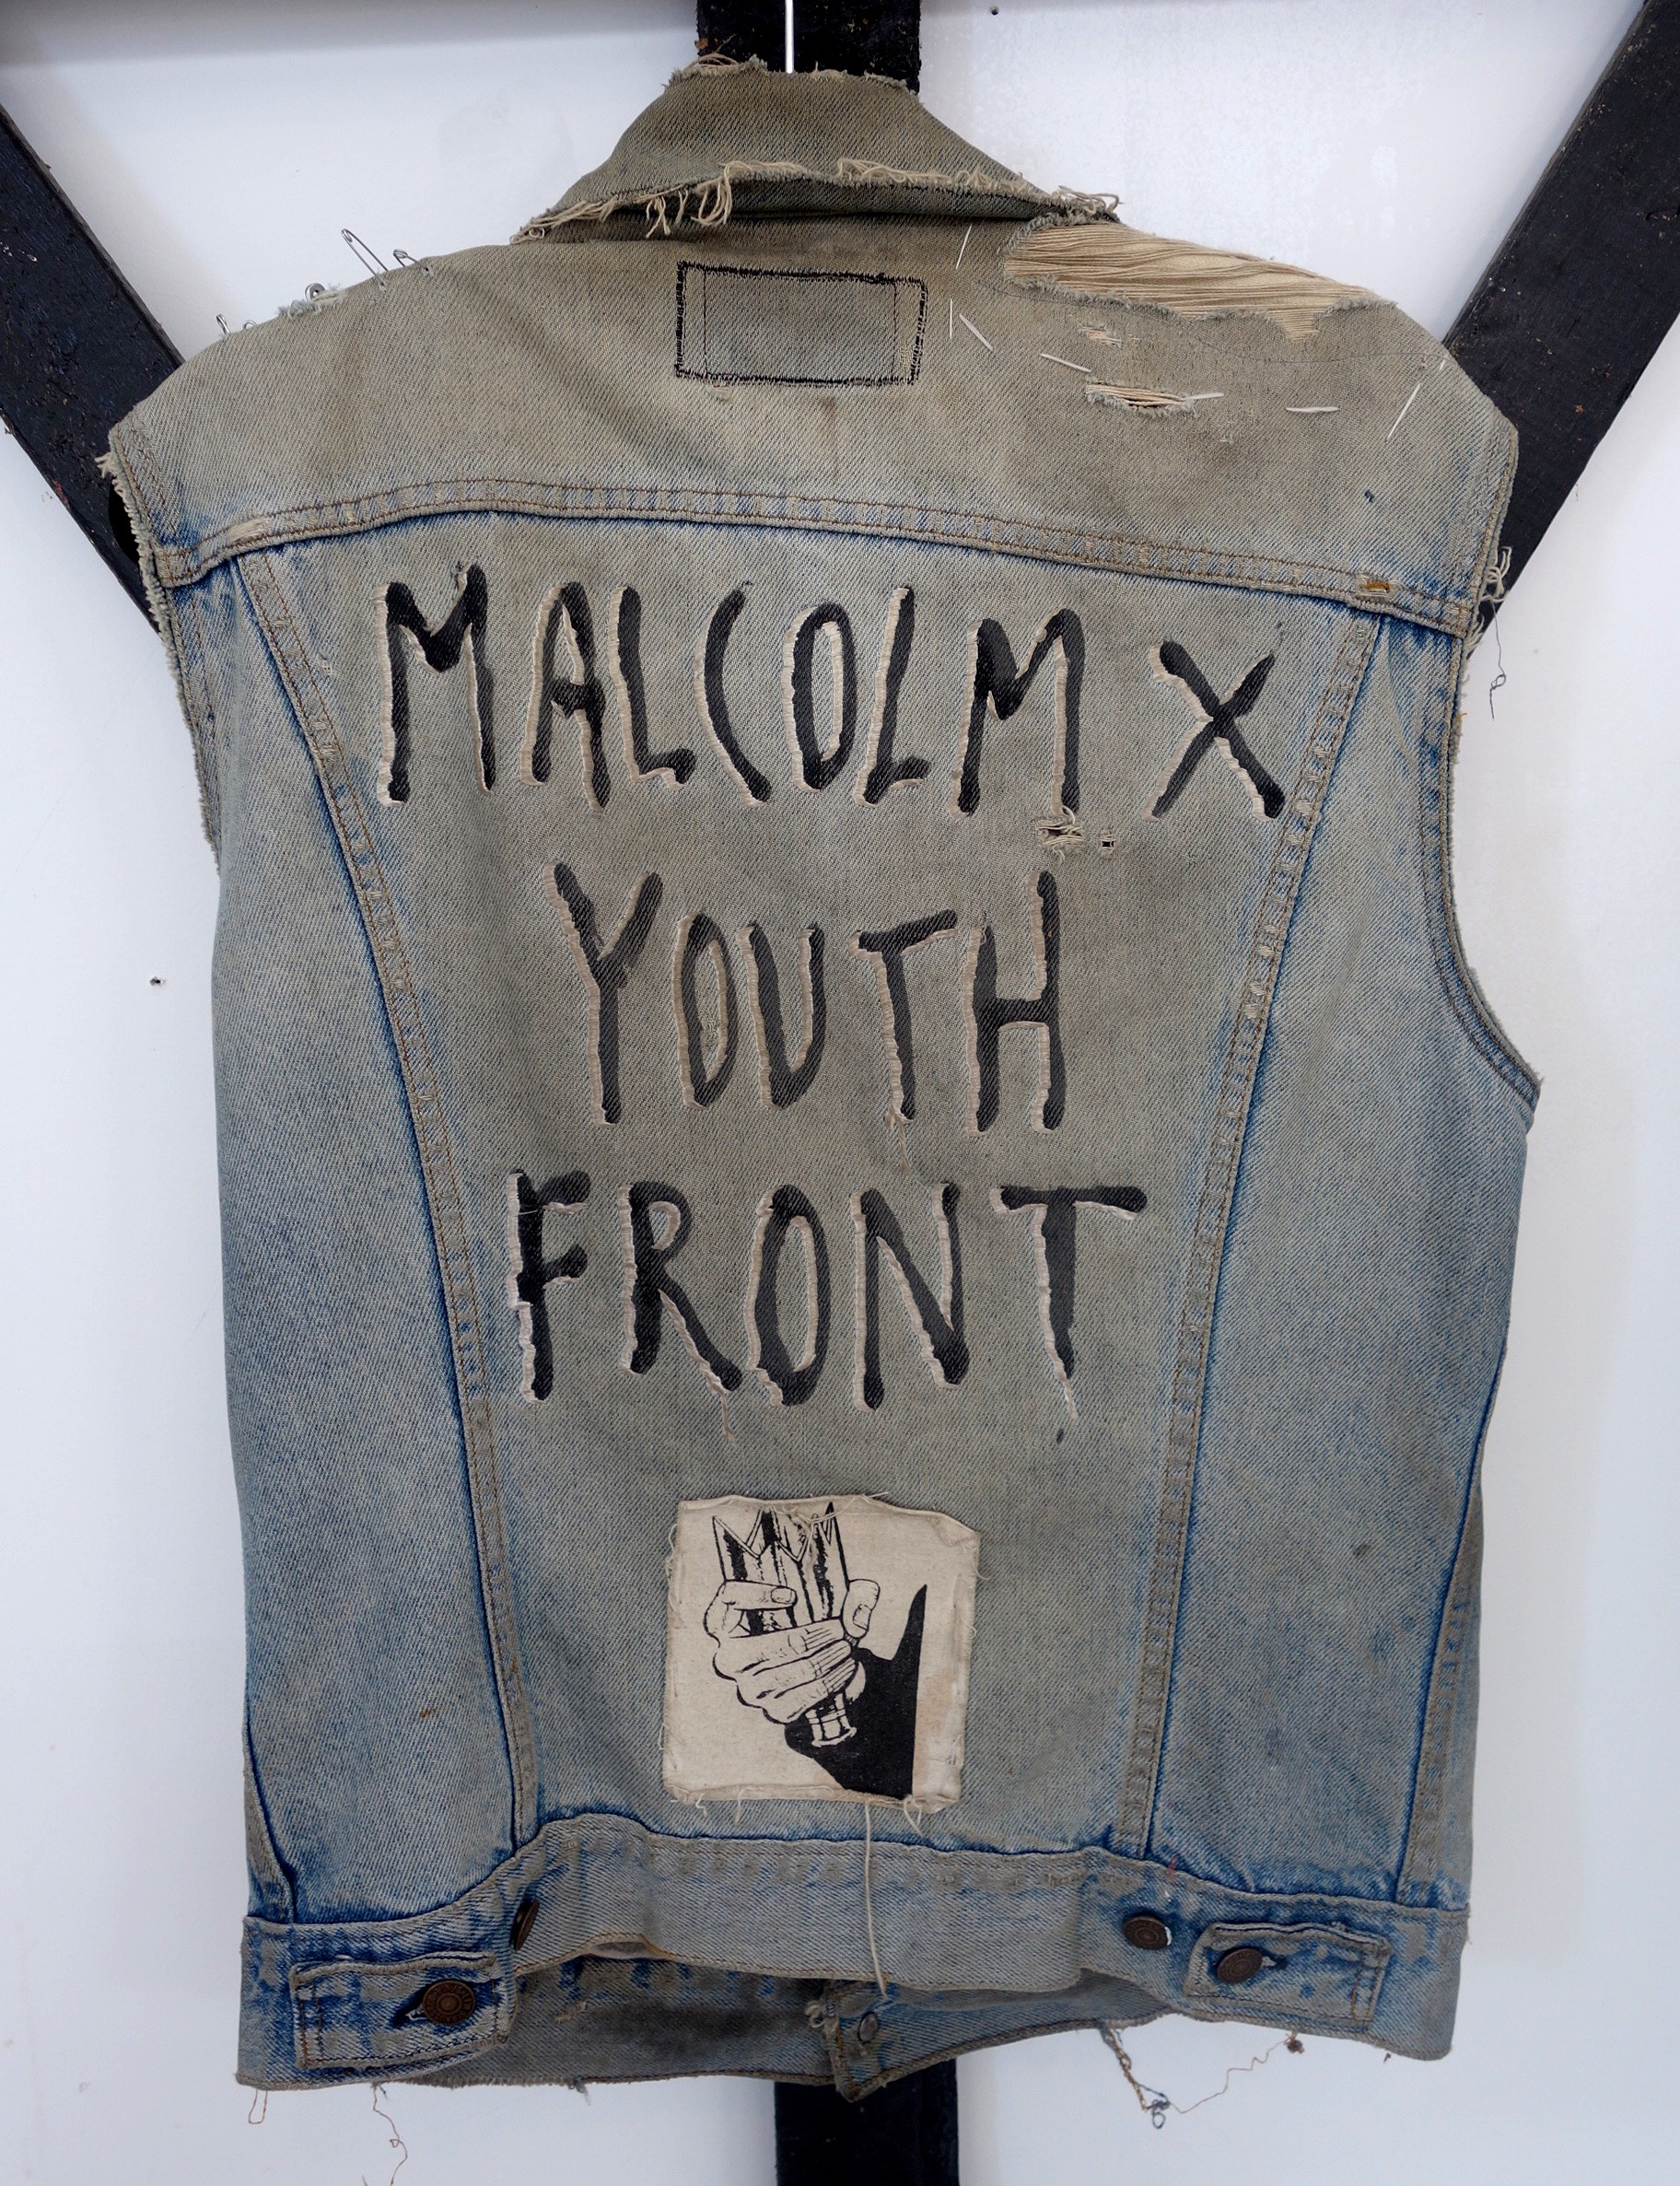 Malcom X Youth Front.jpg